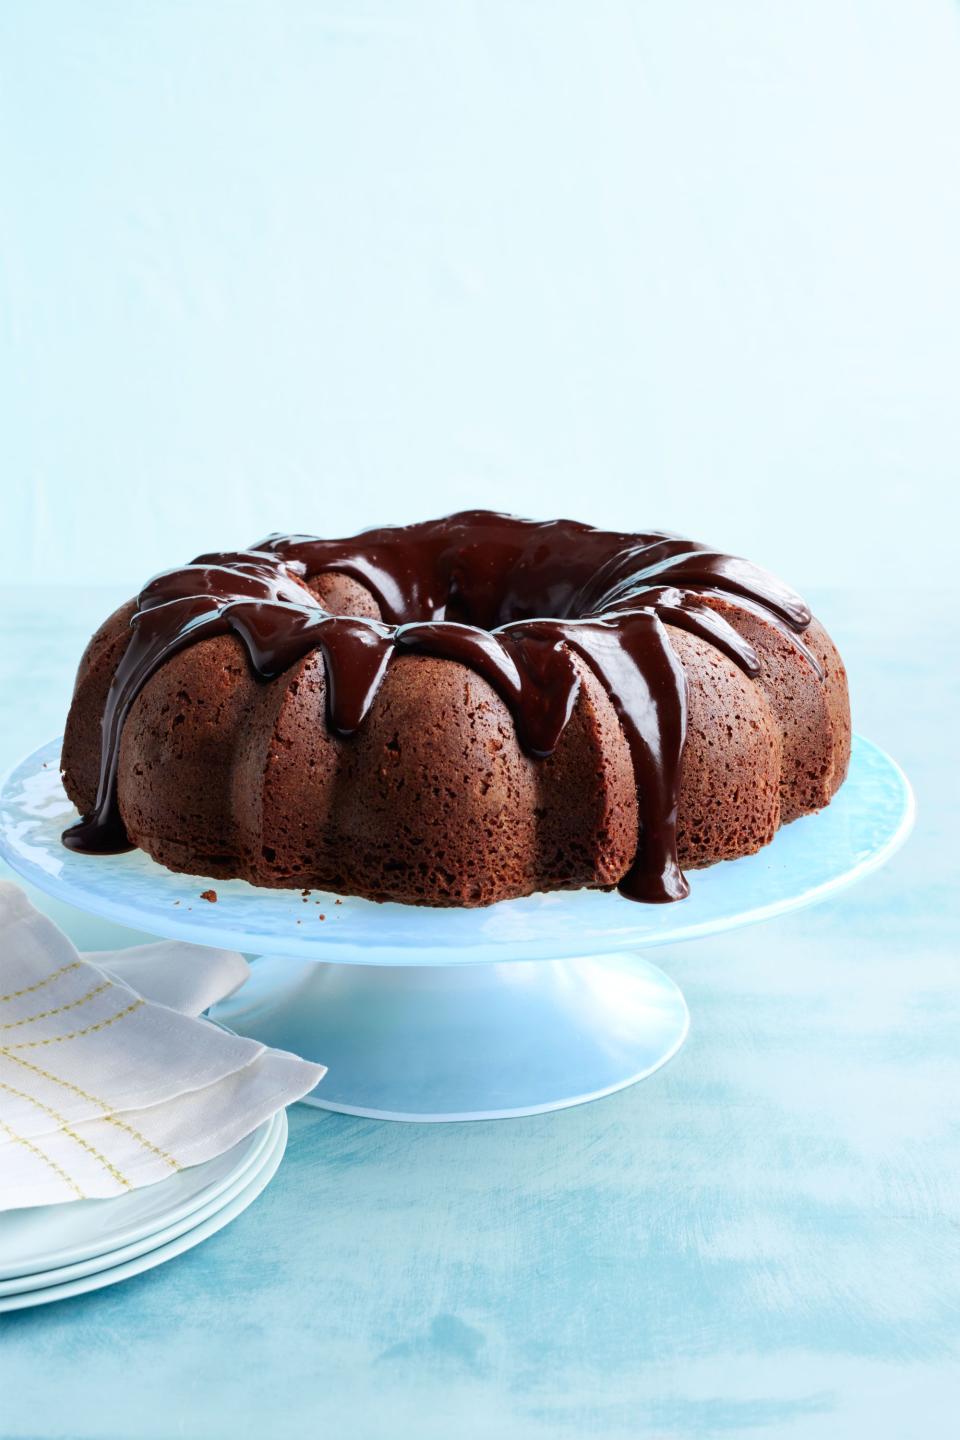 6 Bundt Cake Recipes You'll Fall For Immediately